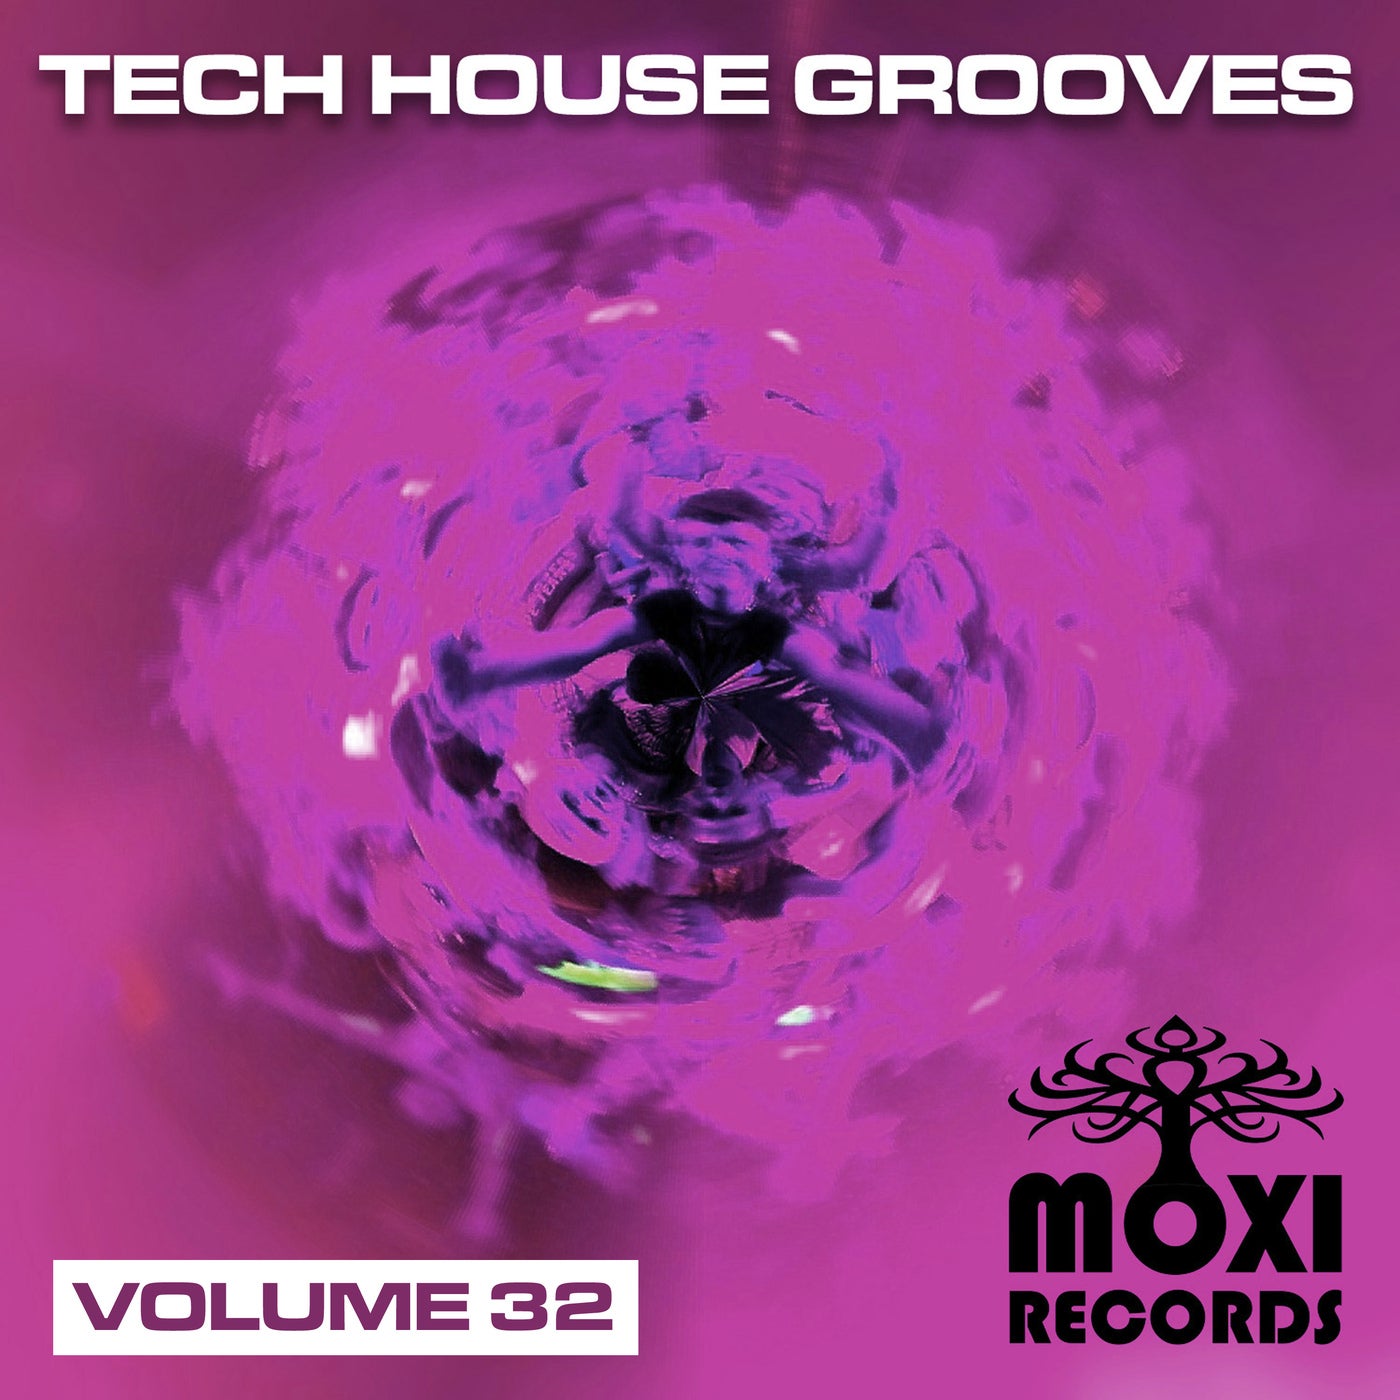 Tech House Grooves Volume 32